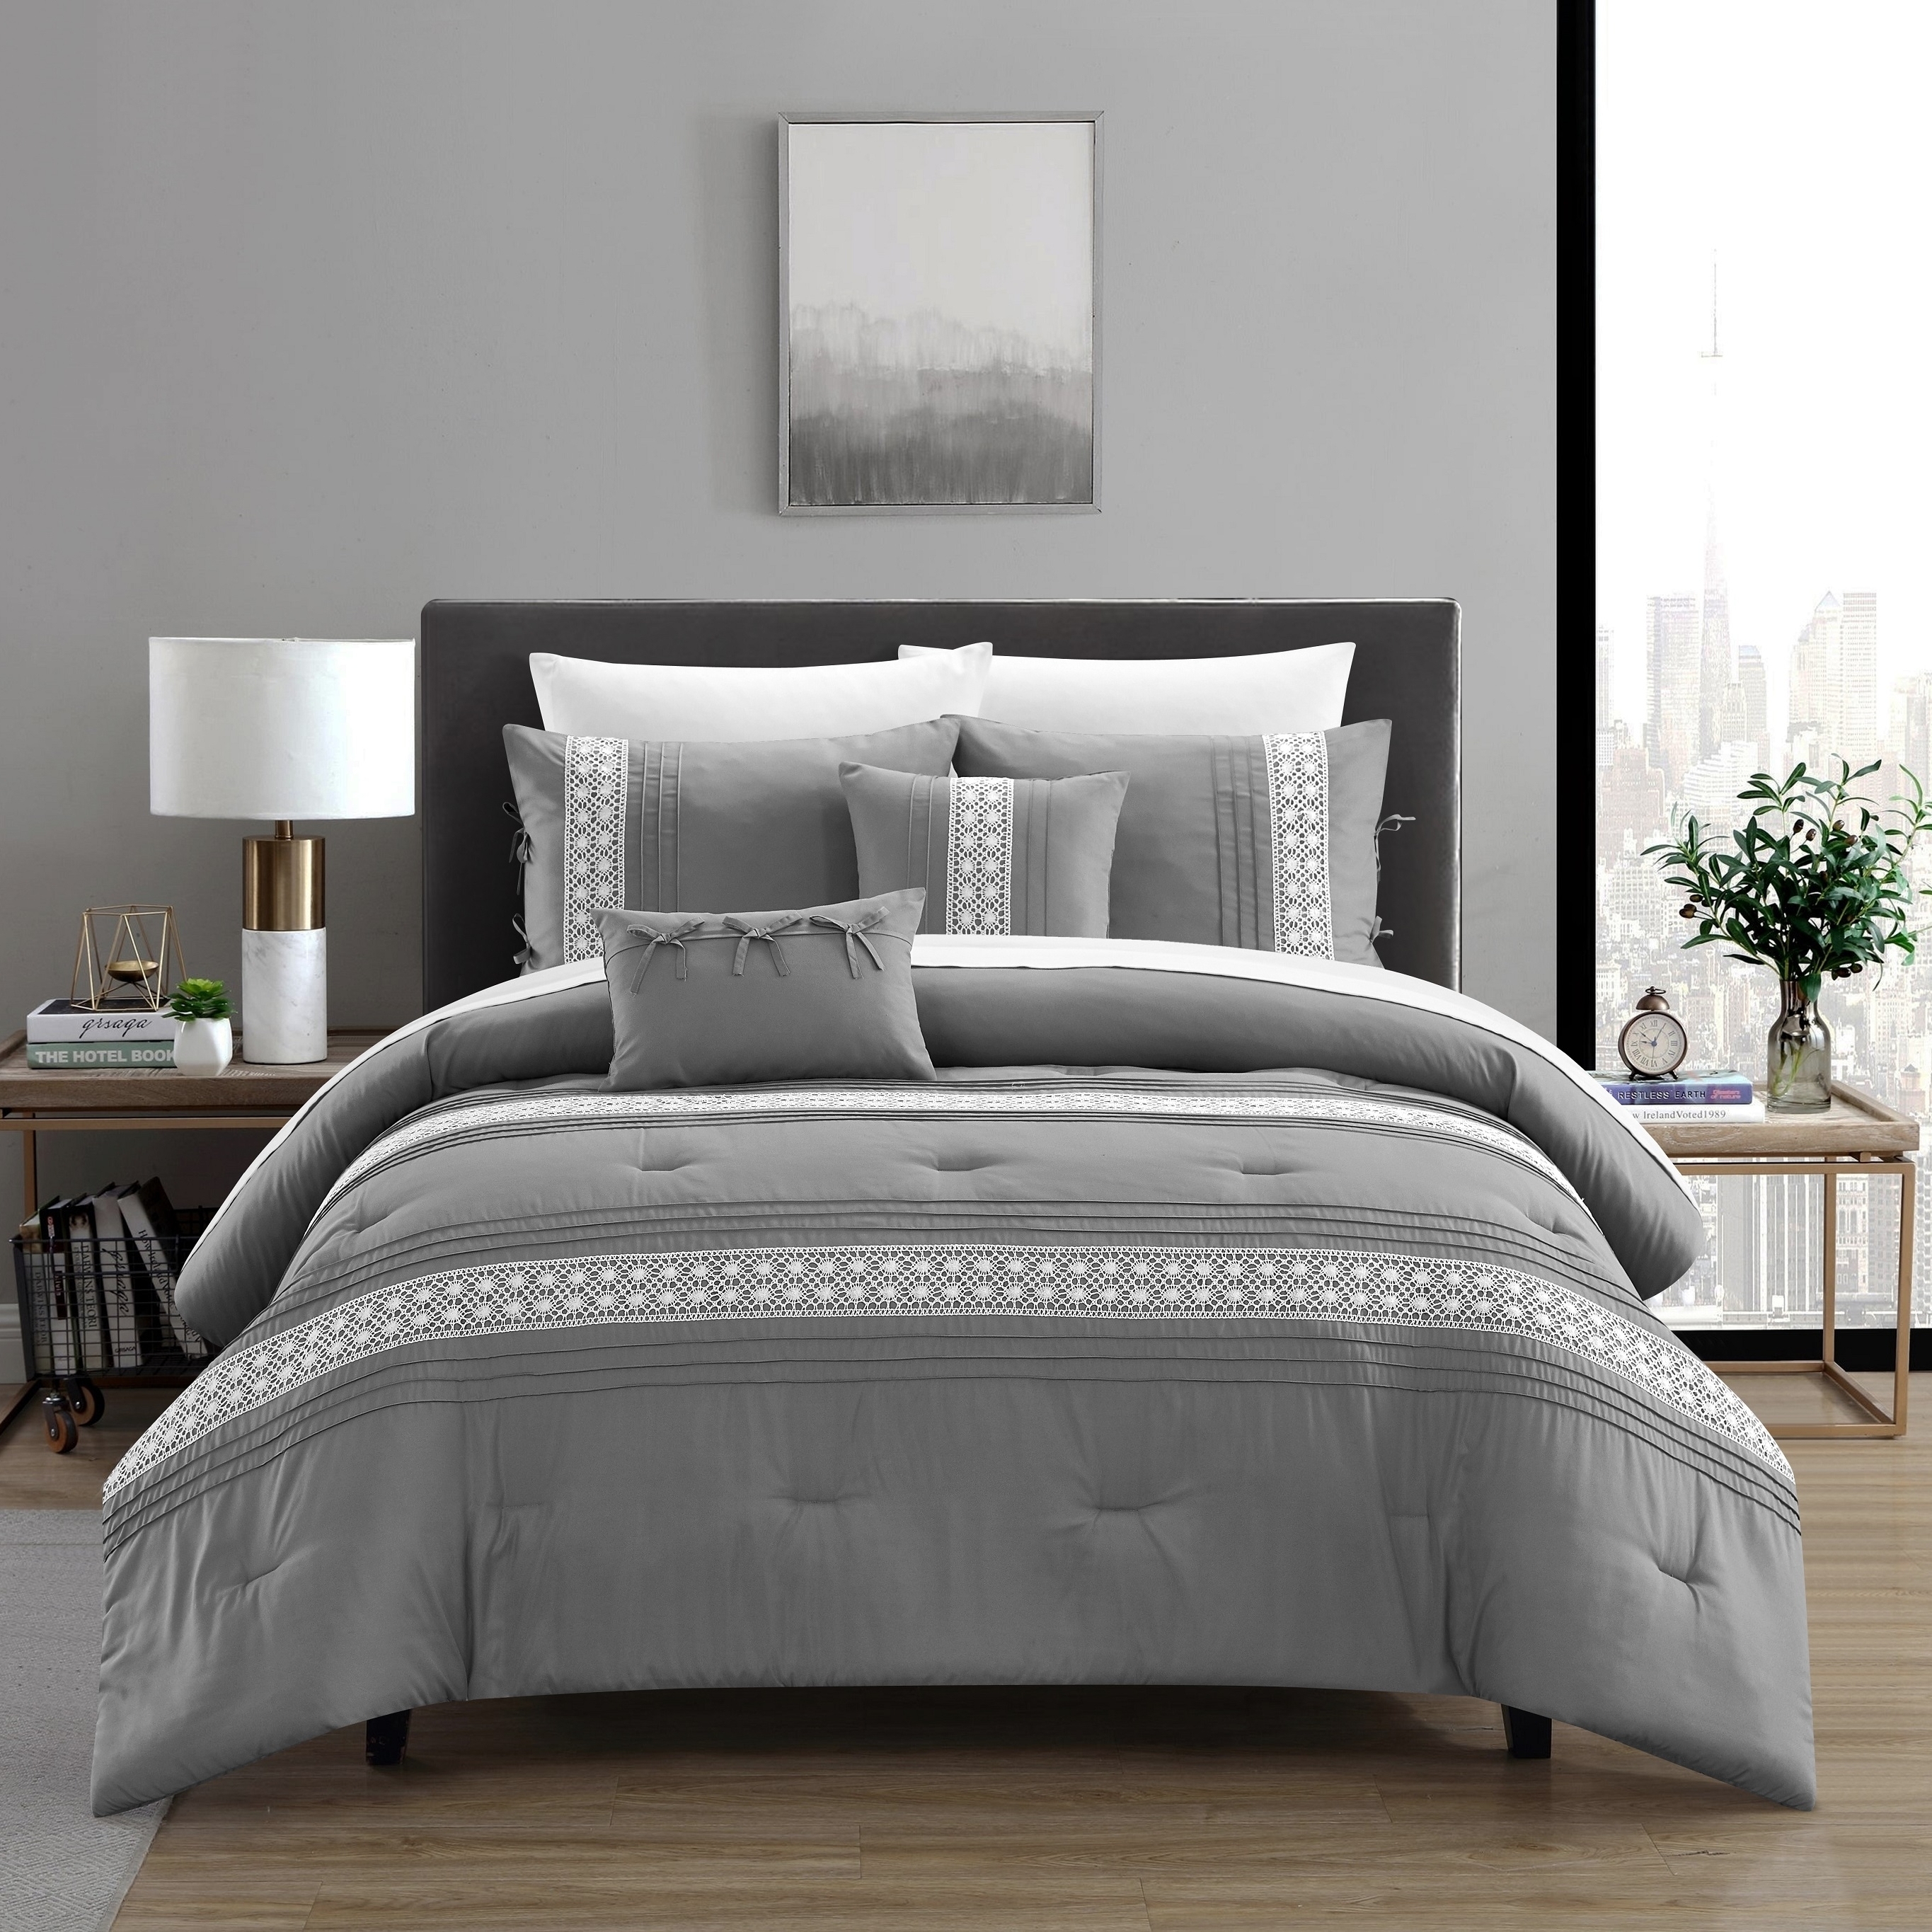 Rycen 5 Piece Comforter Set Pleated Embroidered Design Bedding - Grey, Queen